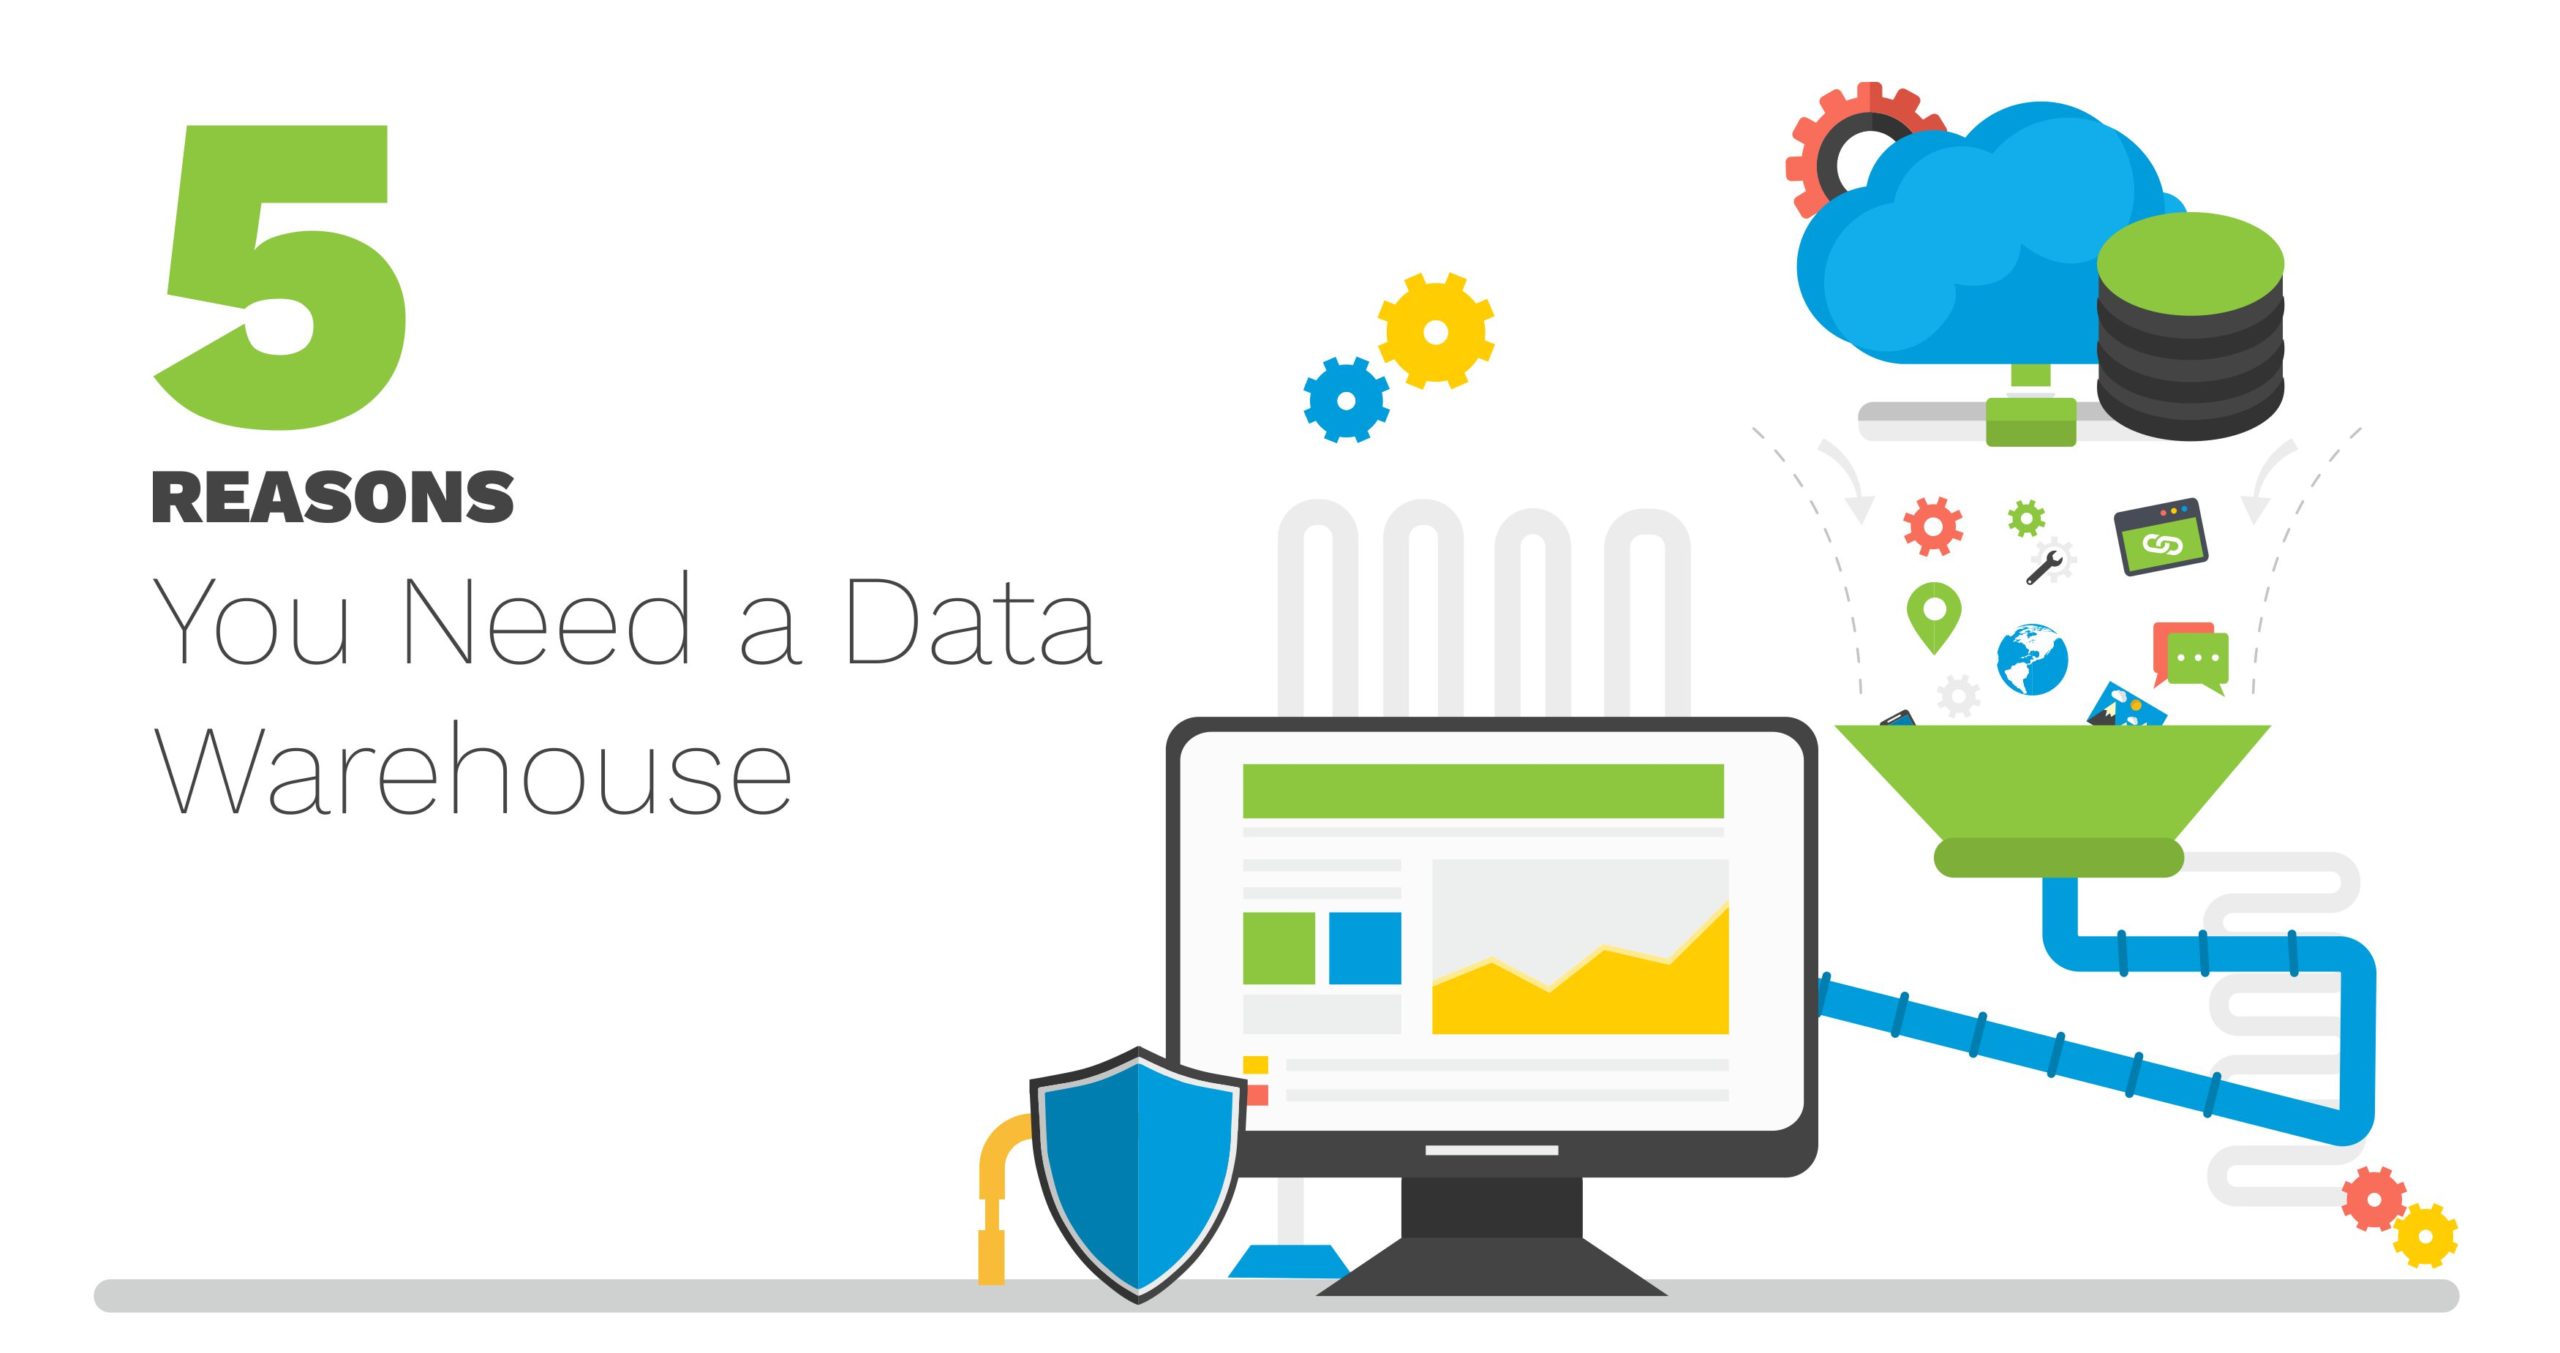 1-Making Data Usable 5 Reasons You Need a Data Warehouse